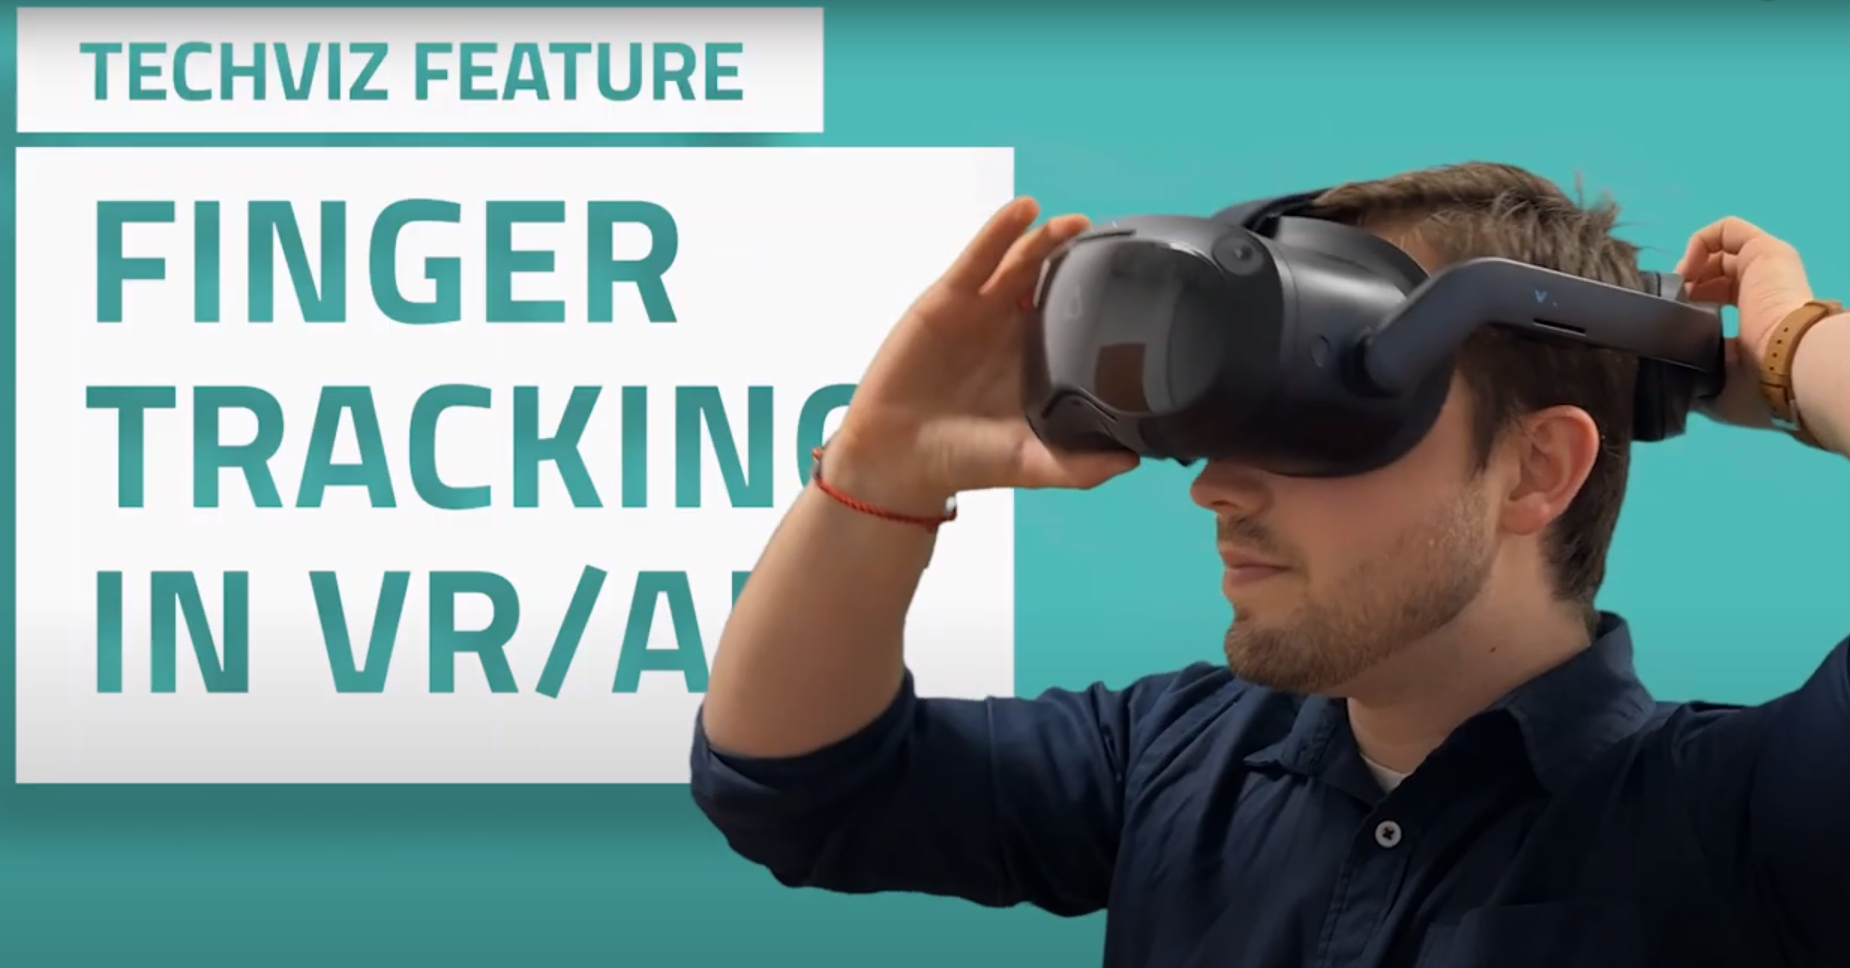 Finger tracking in VR/AR with TechViz software